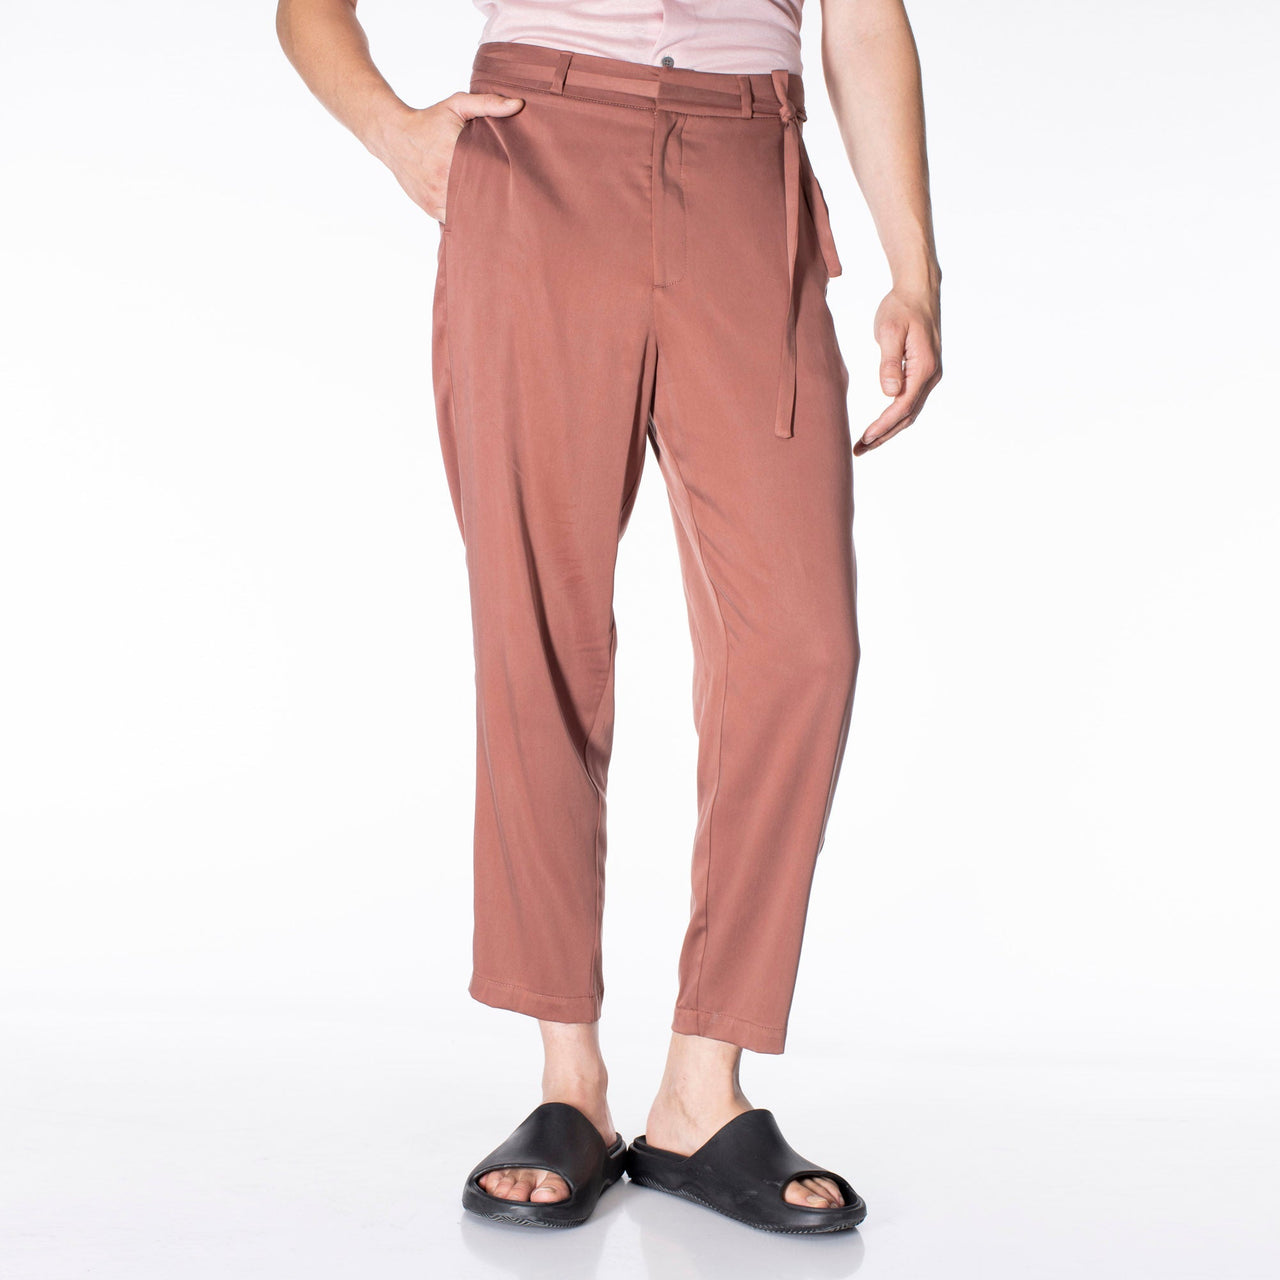 TIM pants (32-50) - light brown